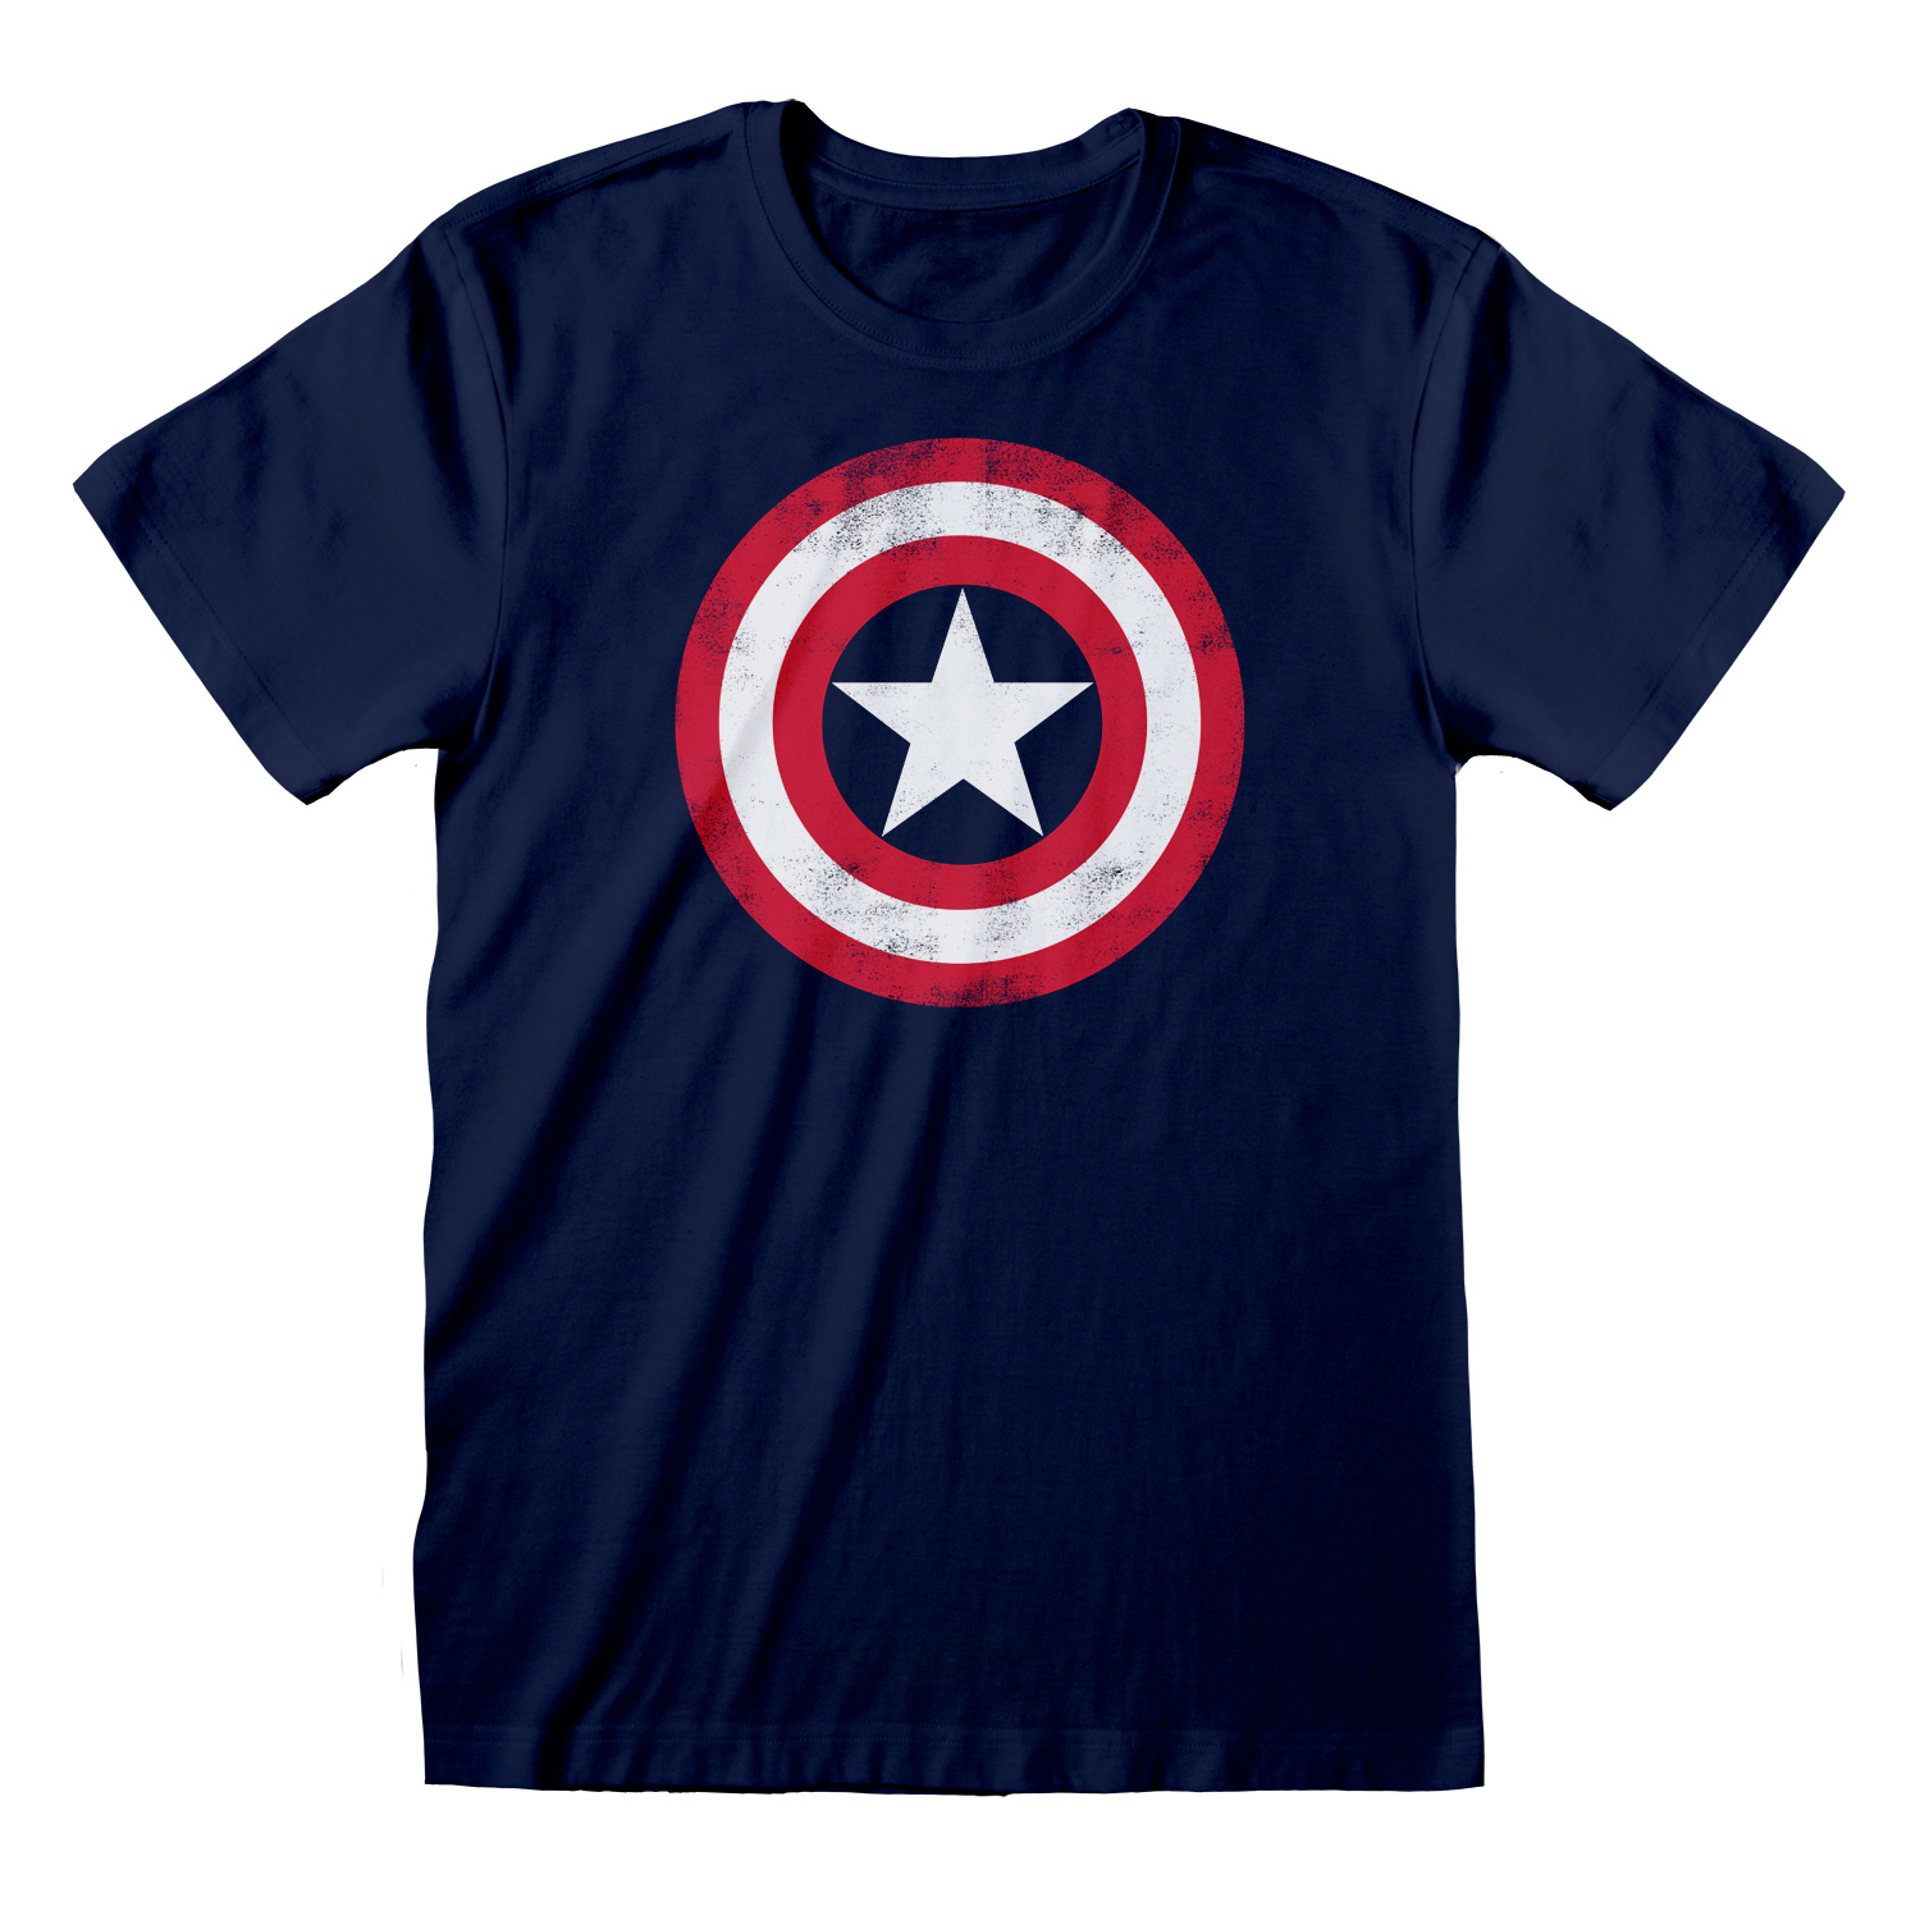 Marvel -  T-shirt unisexe Bleu Marine Logo vieilli du bouclier de Captain America - M